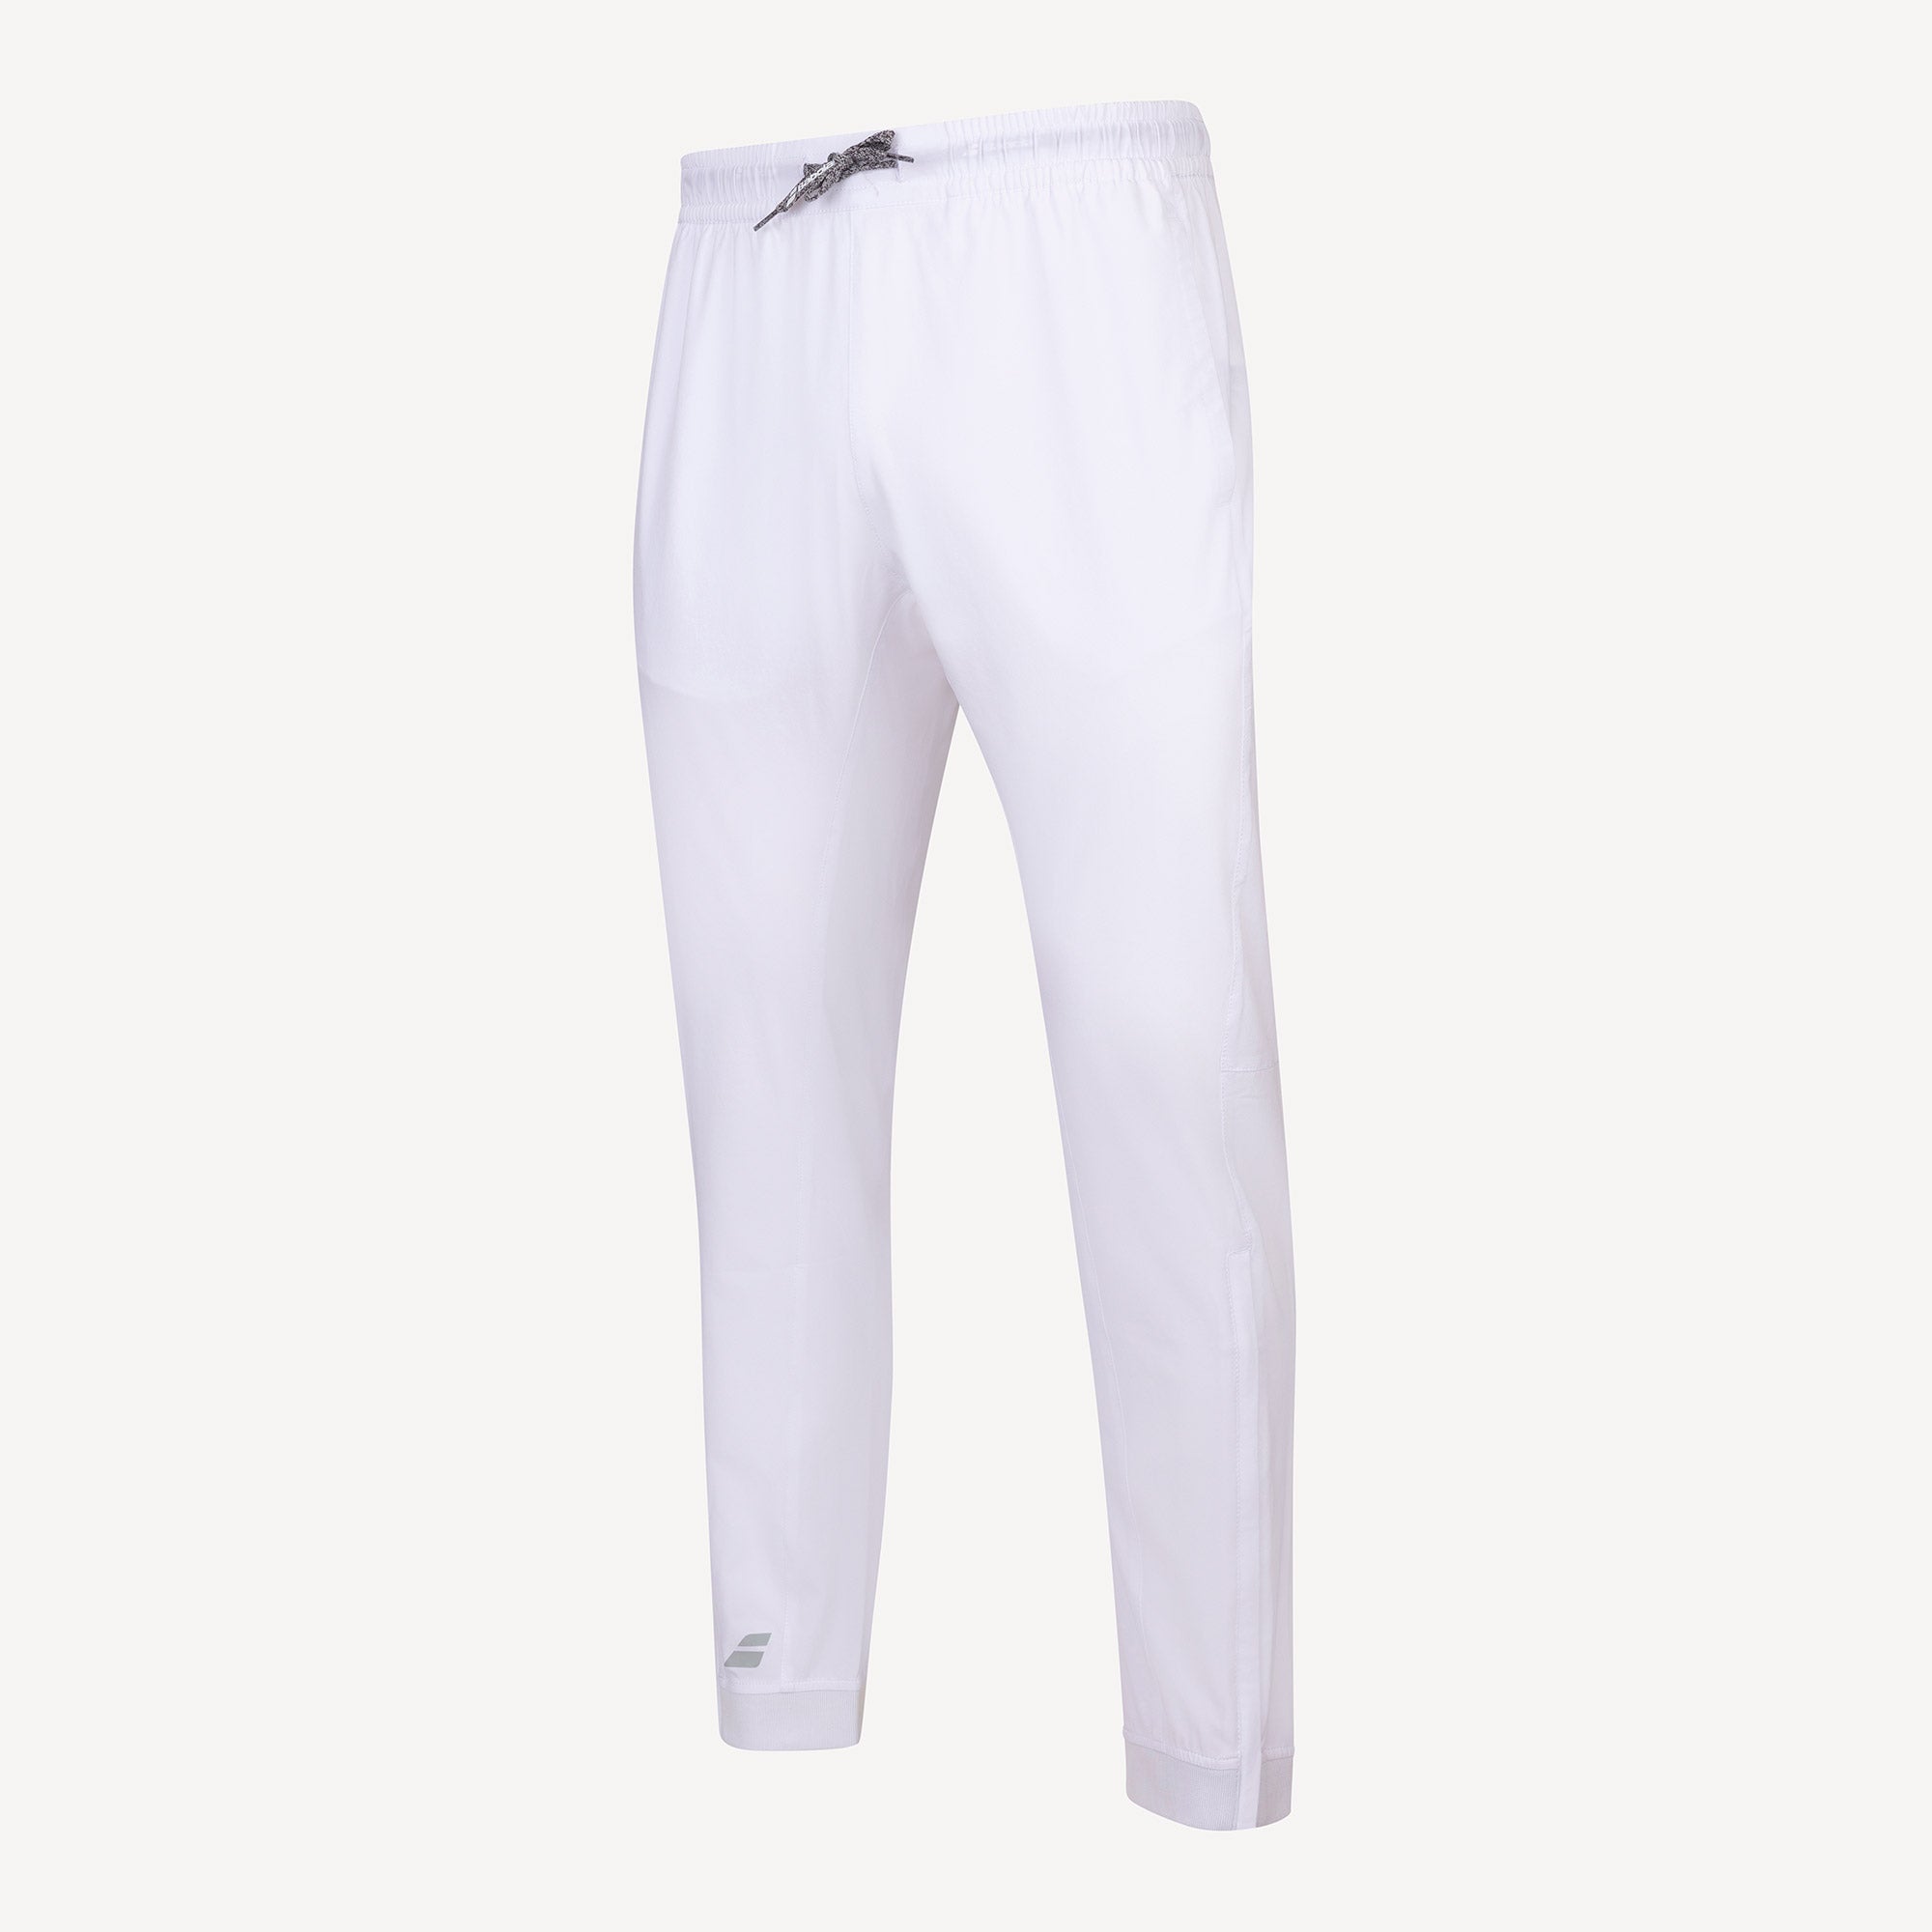 Babolat Play Club Men's Tennis Pants White (1)